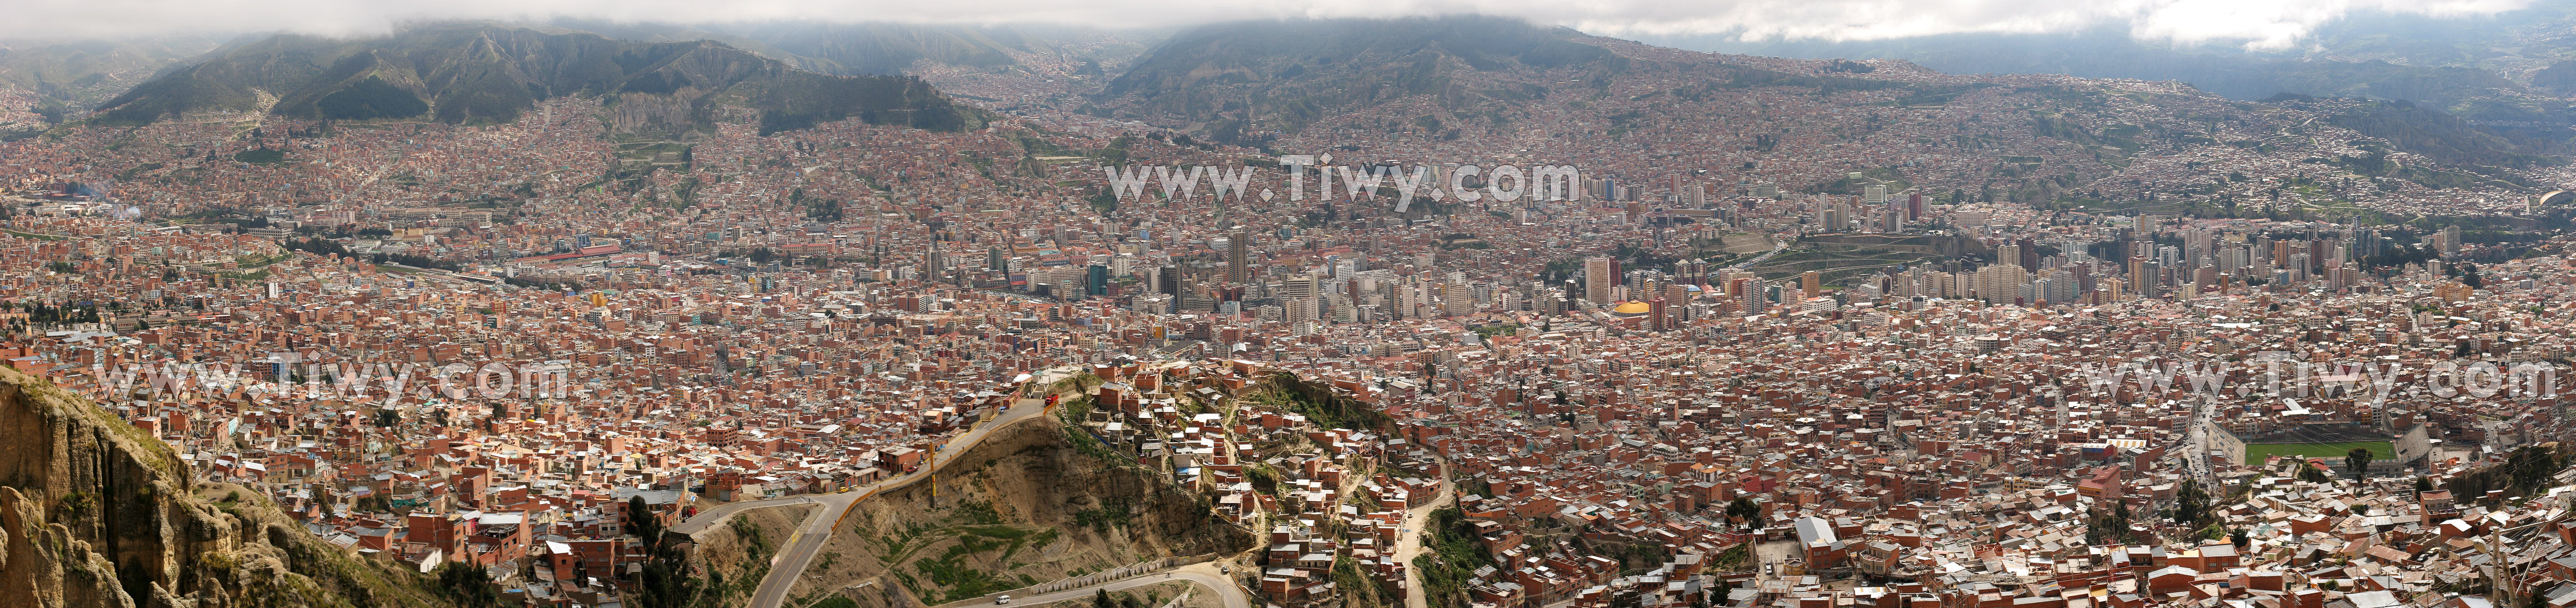 Panorama de la parte central de La Paz